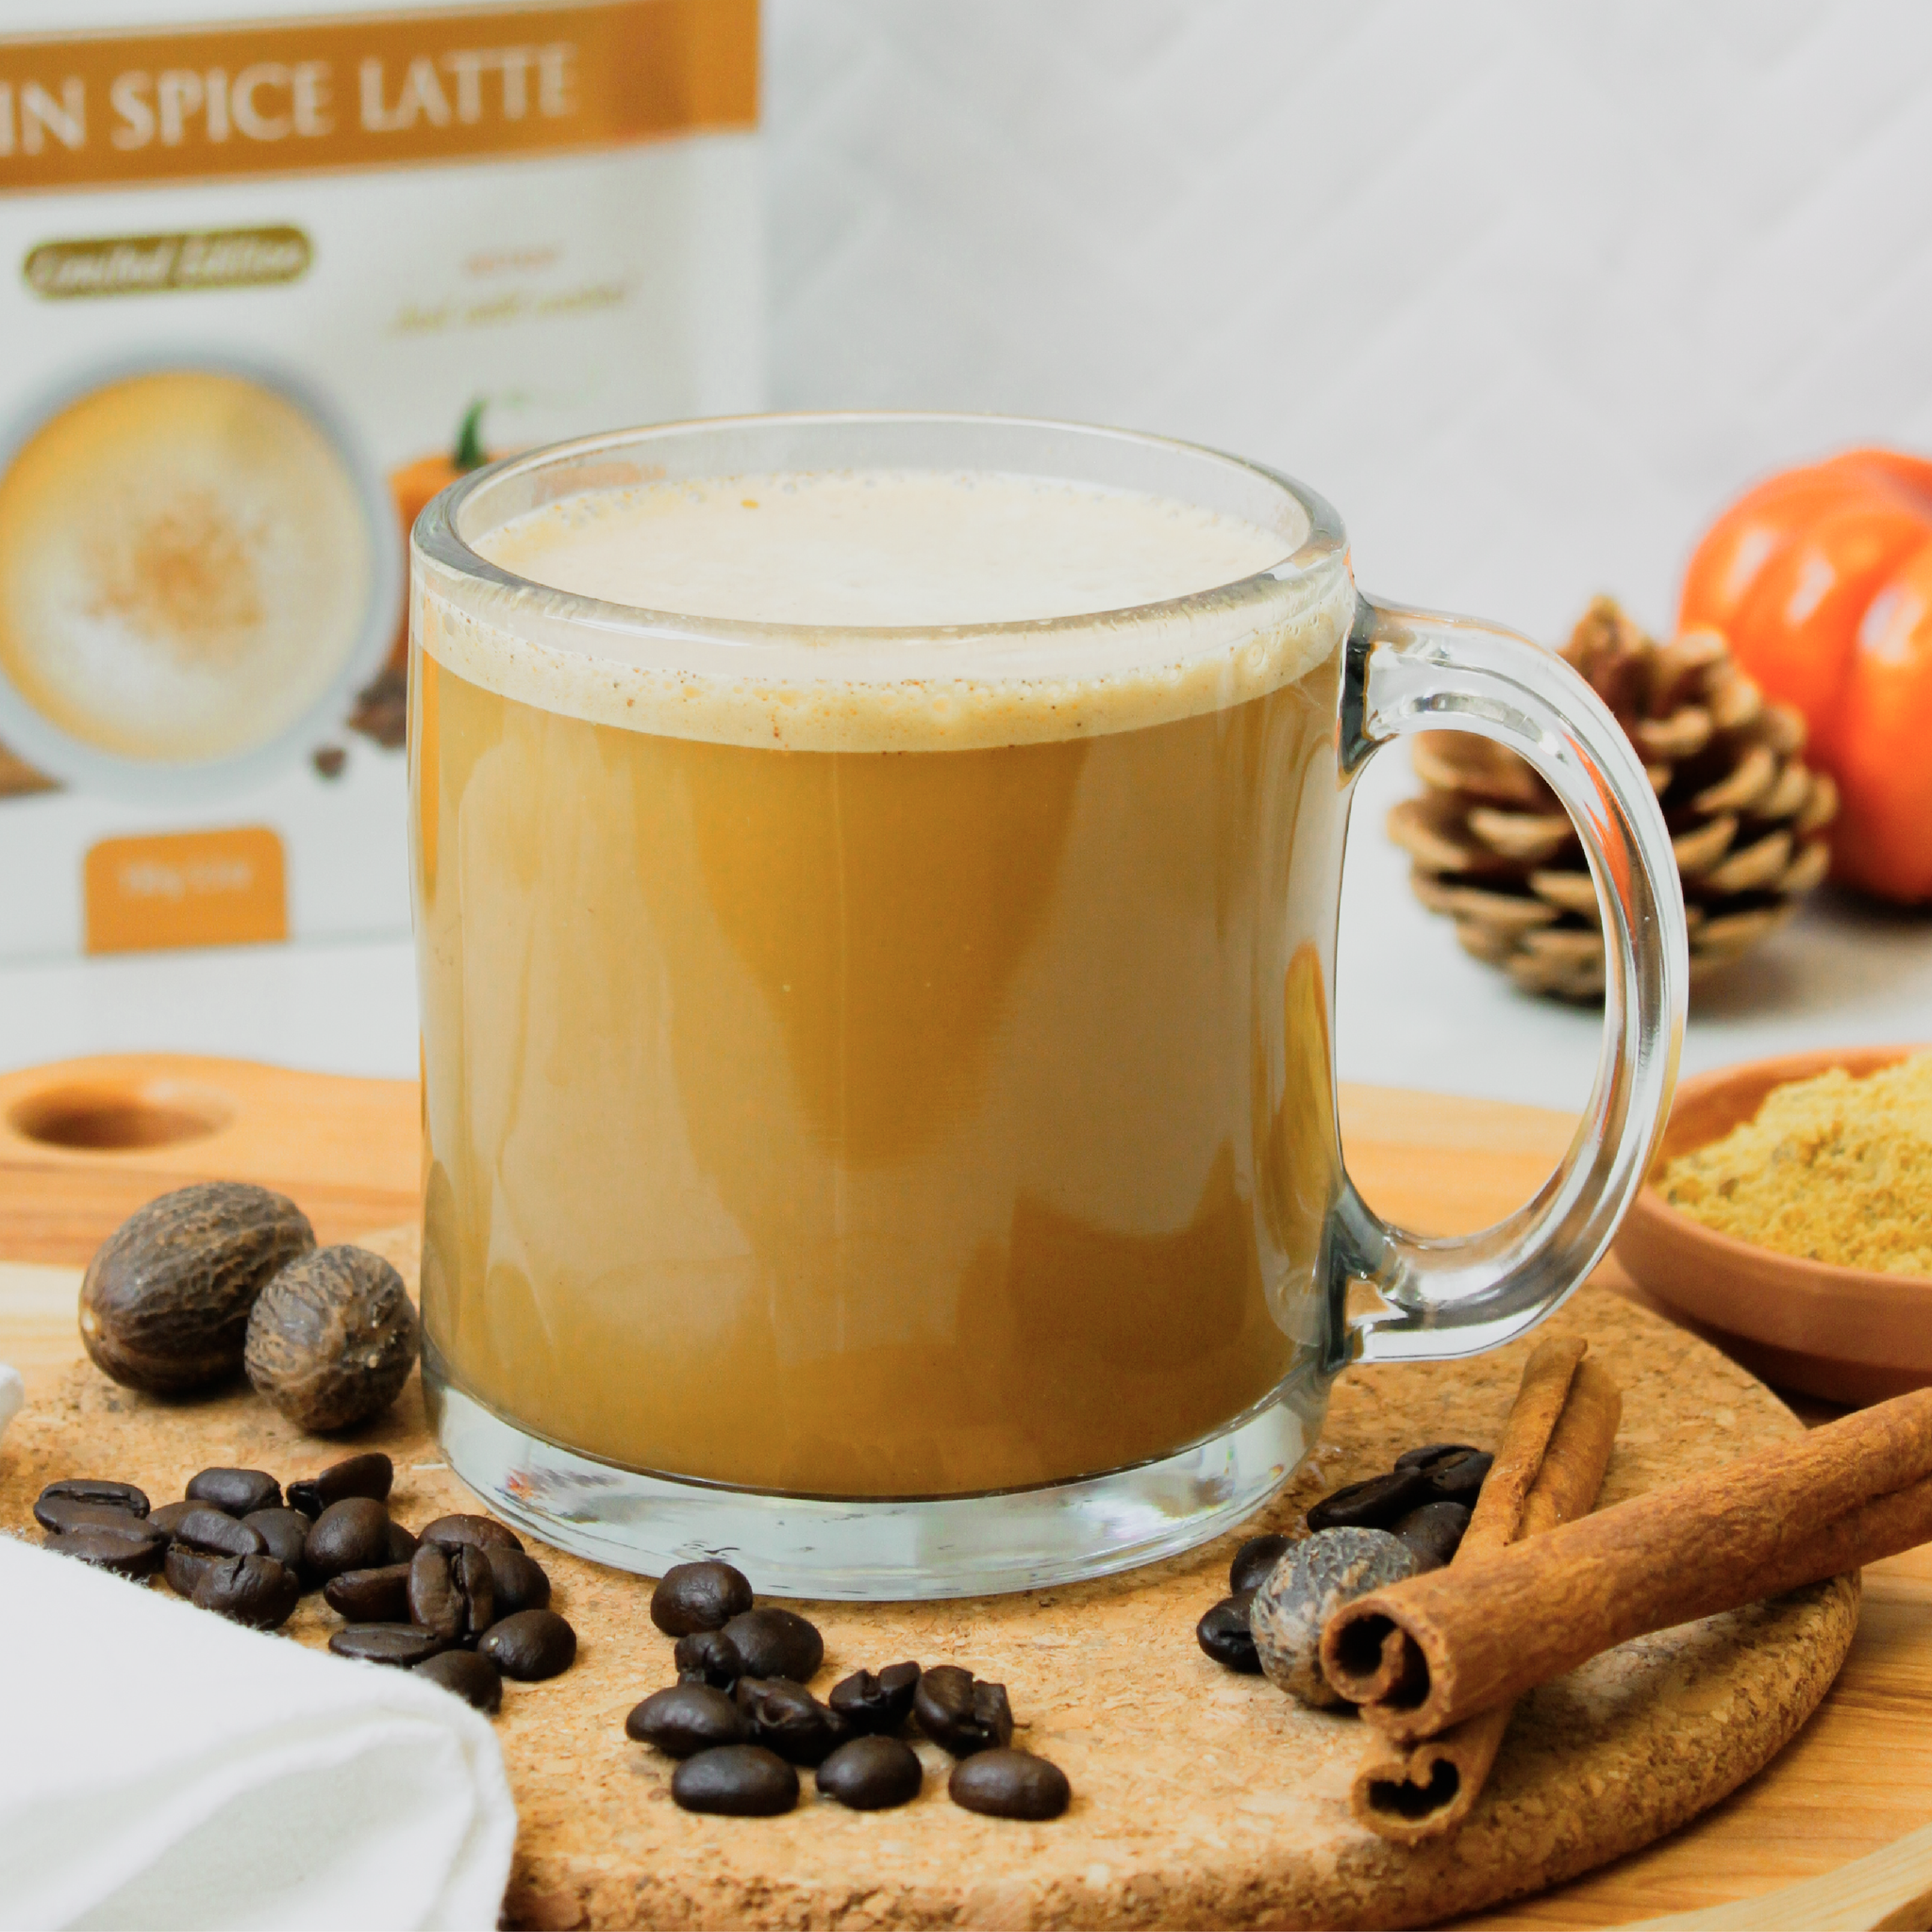 Organic Limited Edition Pumpkin Spice Latte